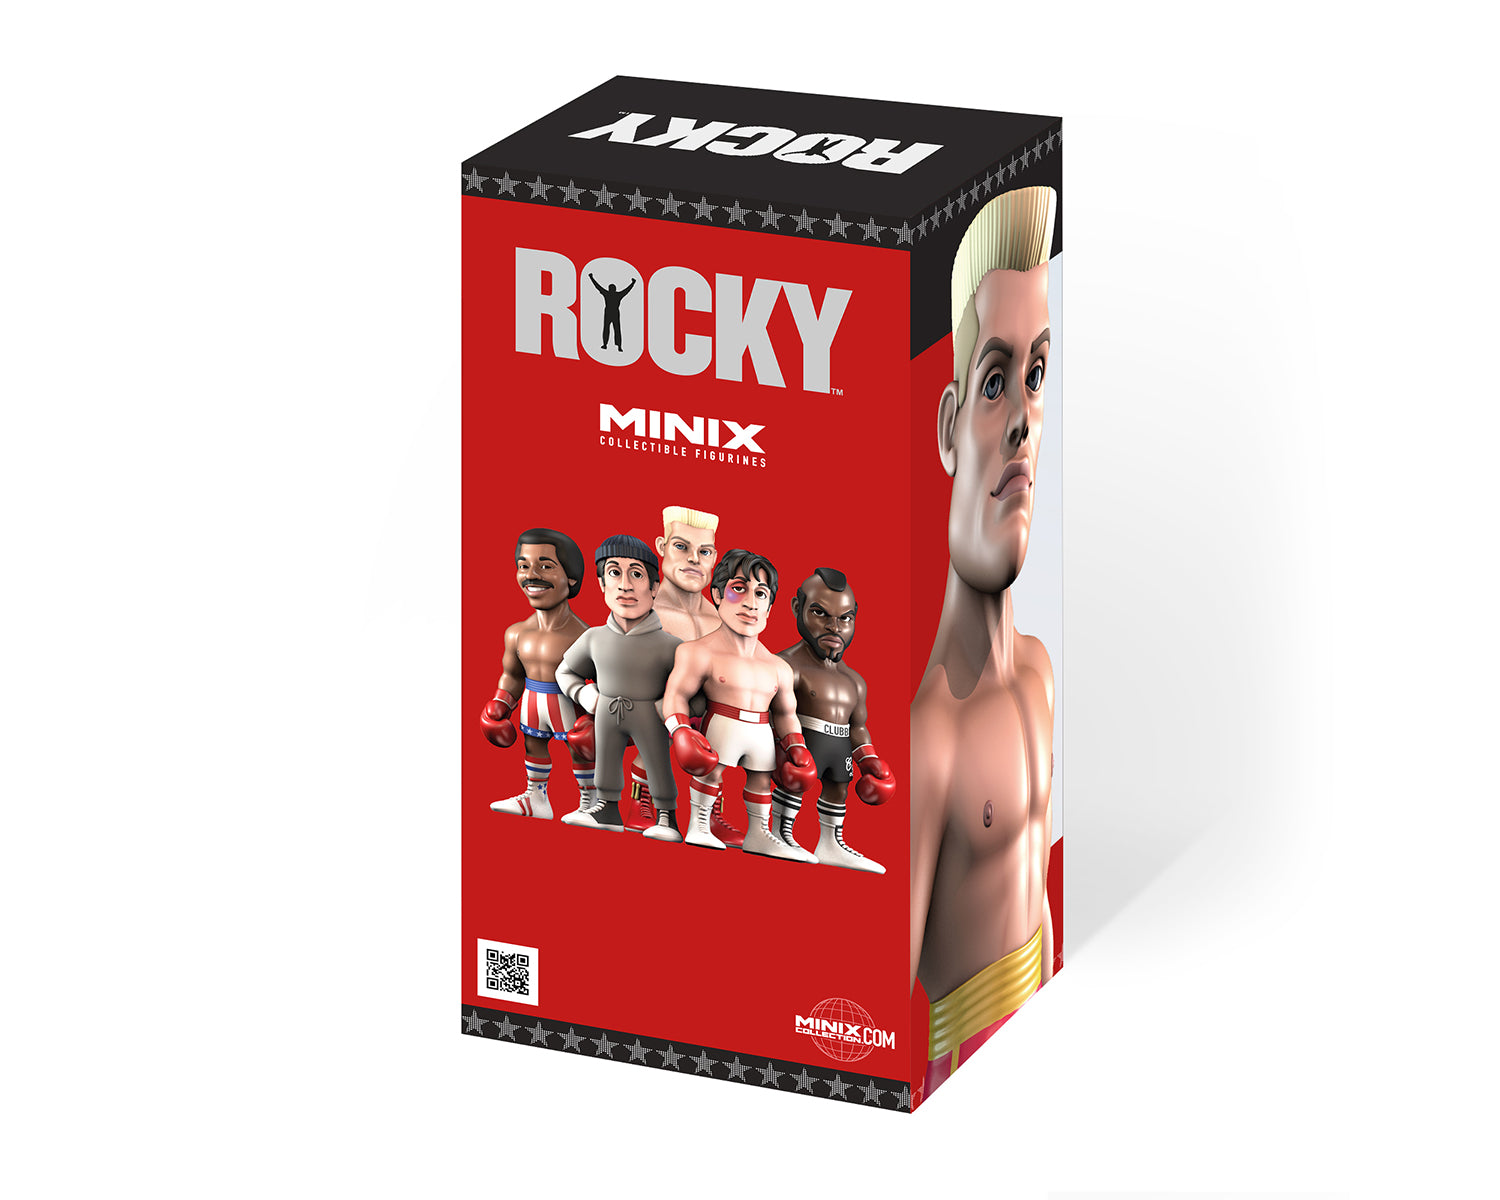 Minix -MOVIES -ROCKY -IVAN DRAGO -Figurine -12 cm